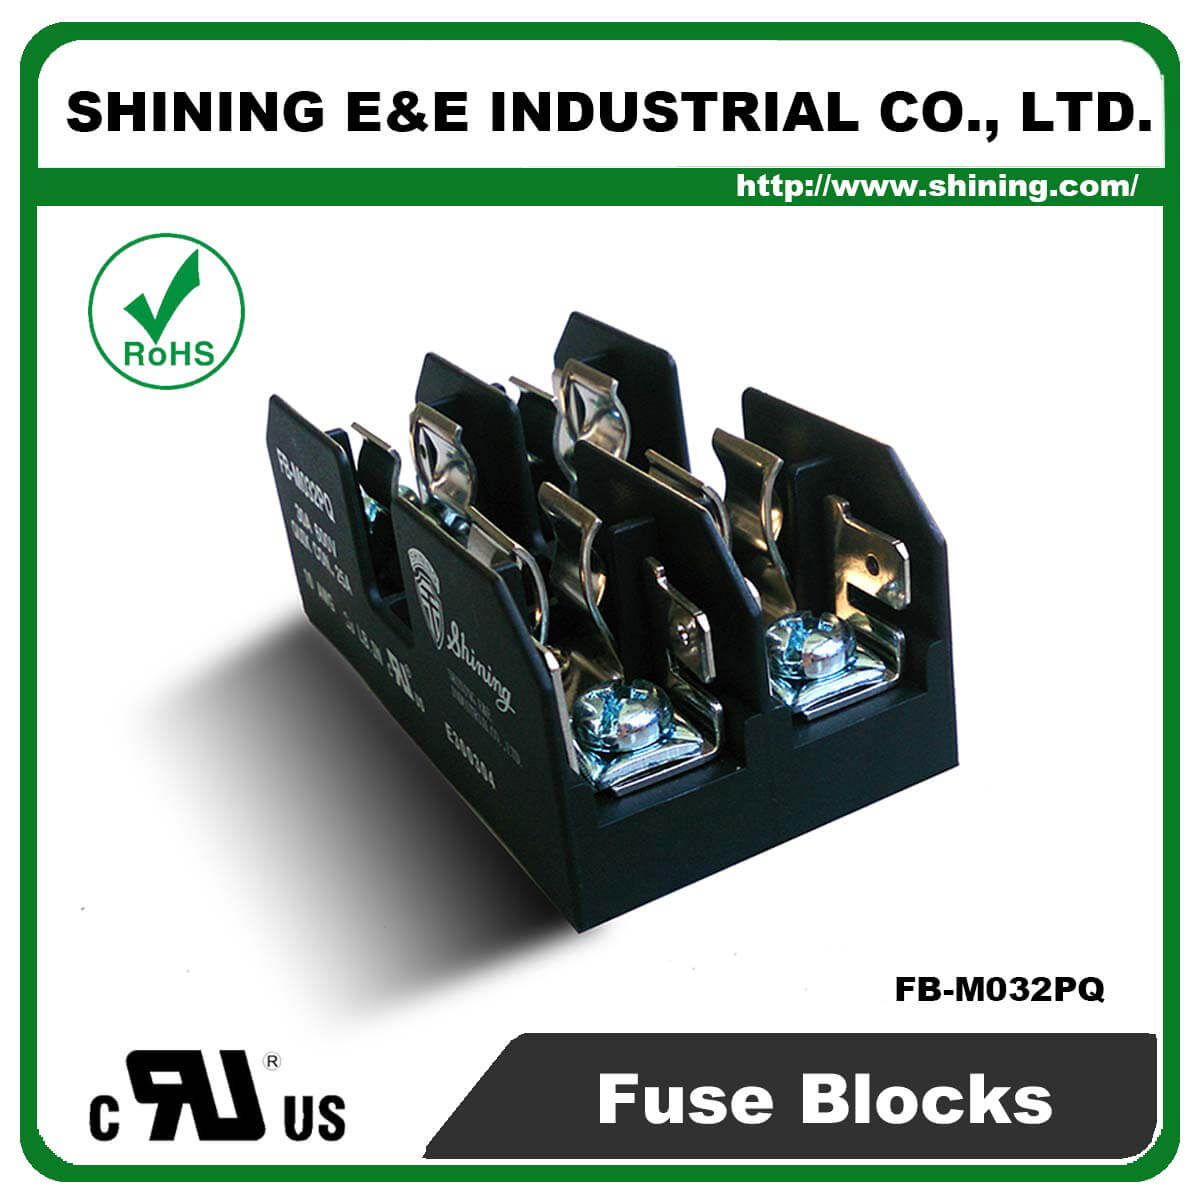 FB-M032PQ For 10x38mm Fuse 600V 30 Amp 2 Position Midget Fuse Block